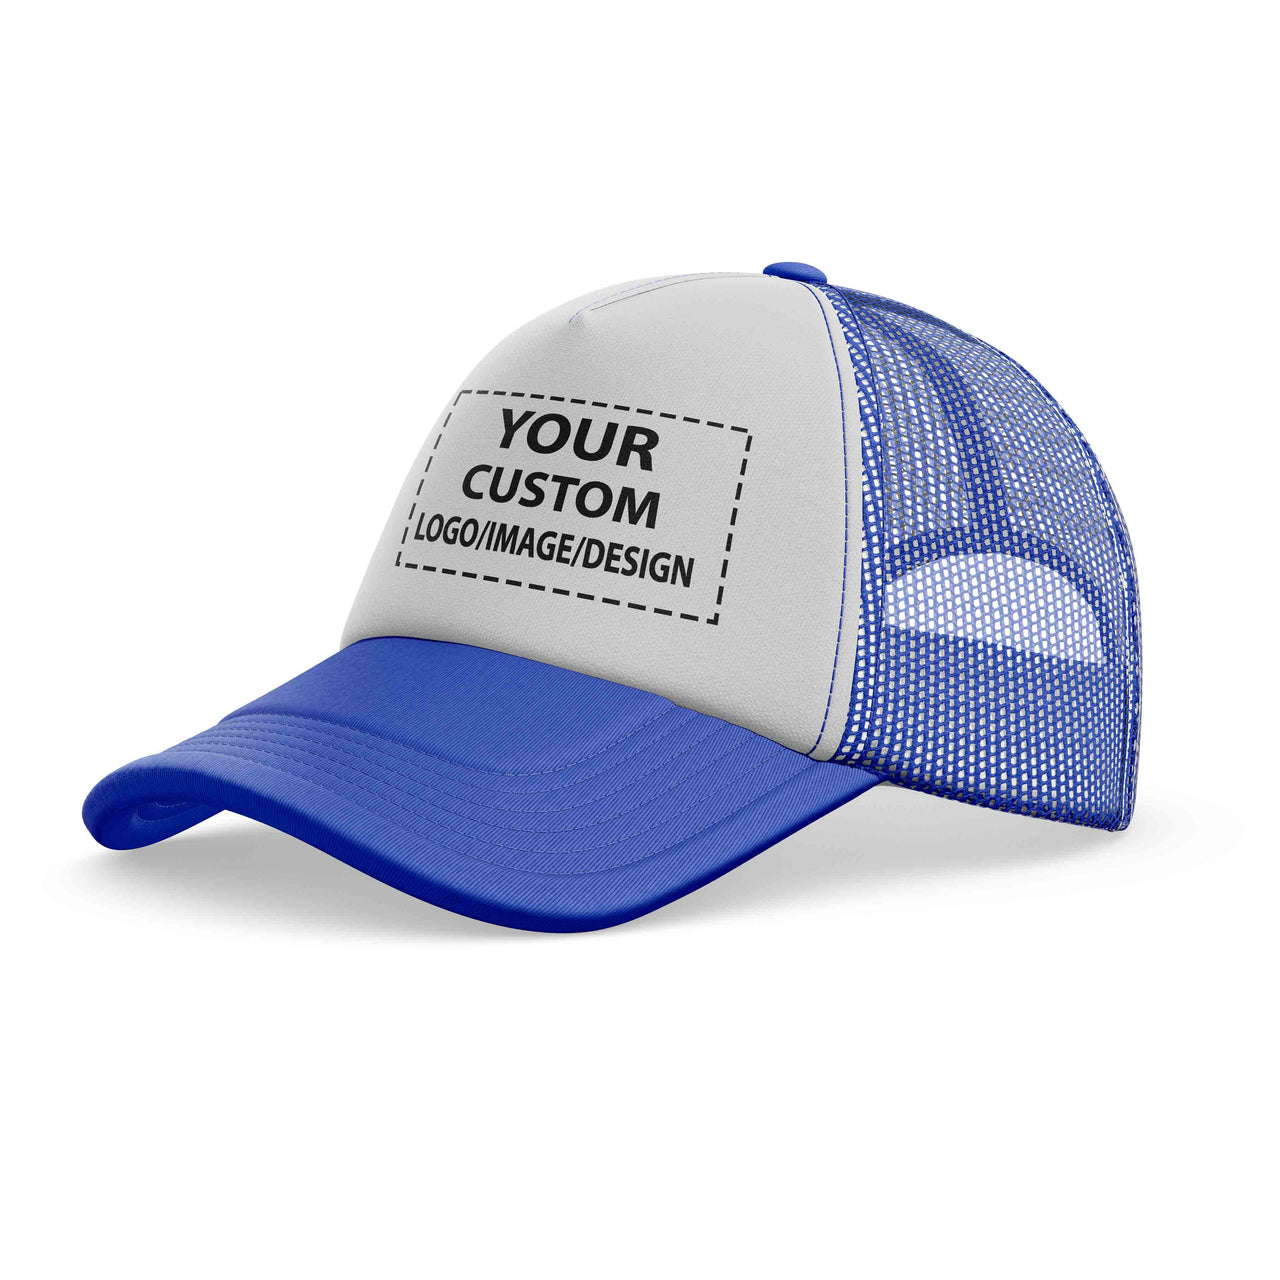 Custom Logo/Design/Image Designed Trucker Caps & Hats